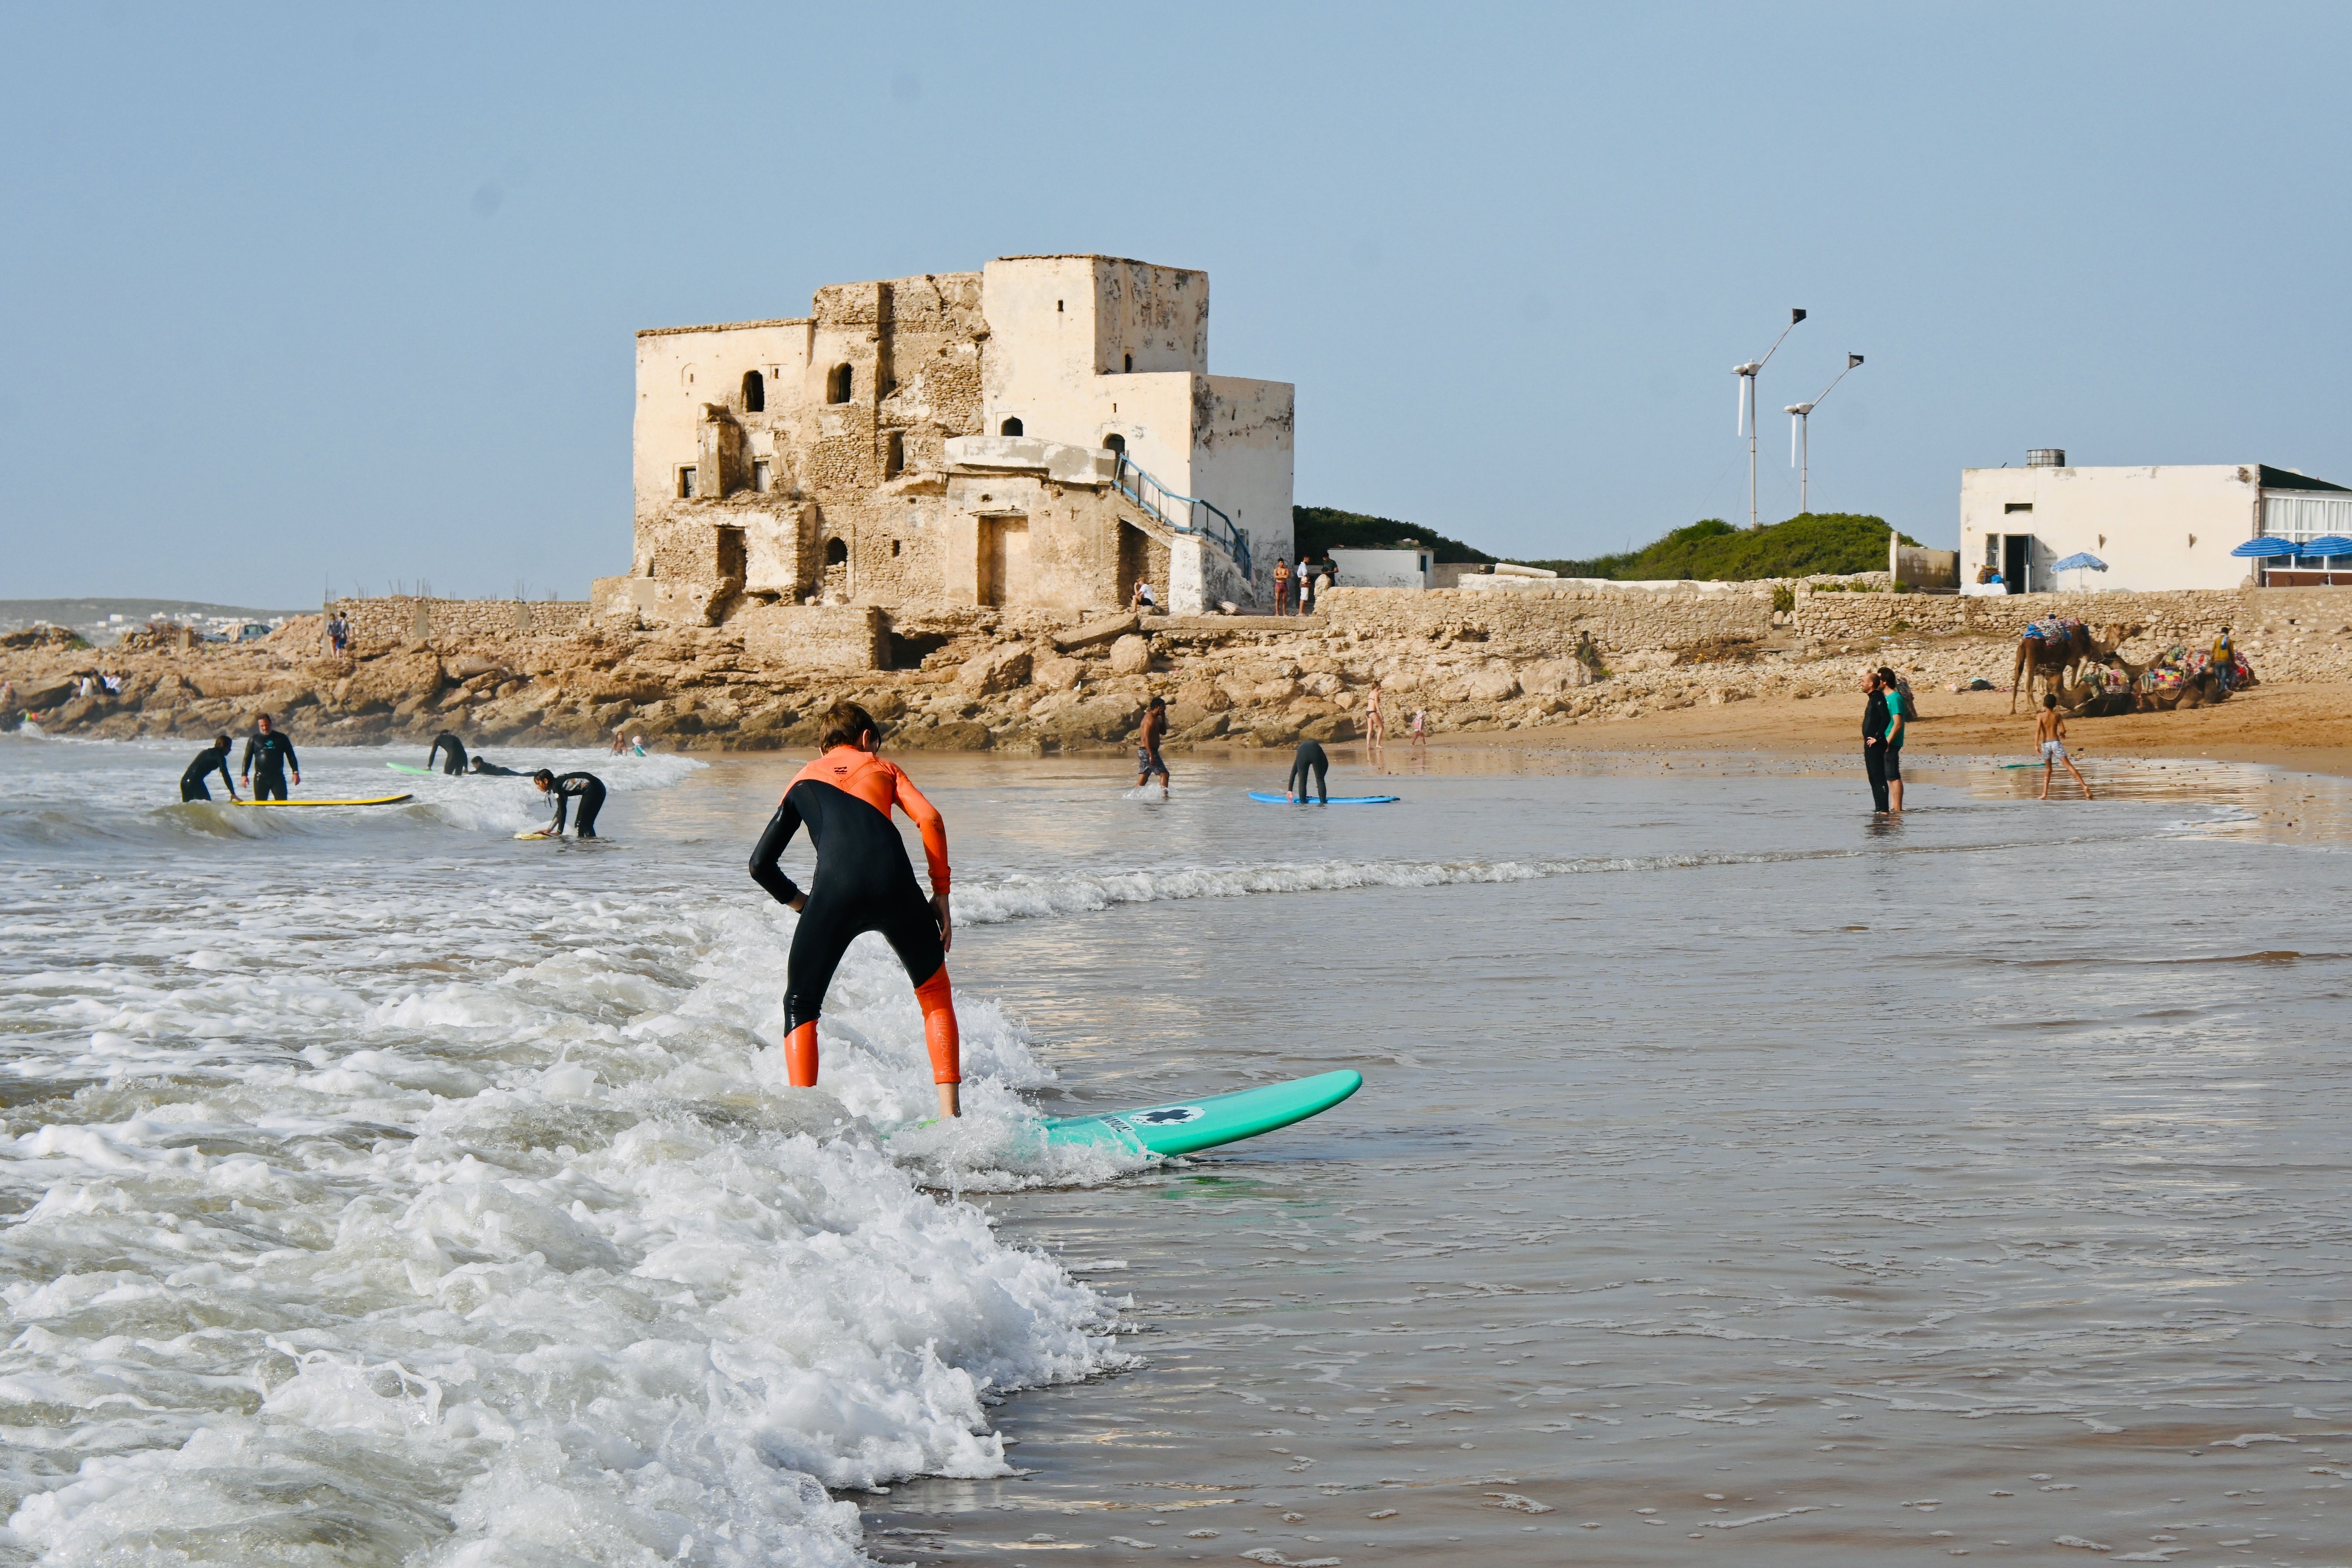 Marokko for family individuell - Erfahrungen mit Kindern in Marokko - Surfen im Atlantik